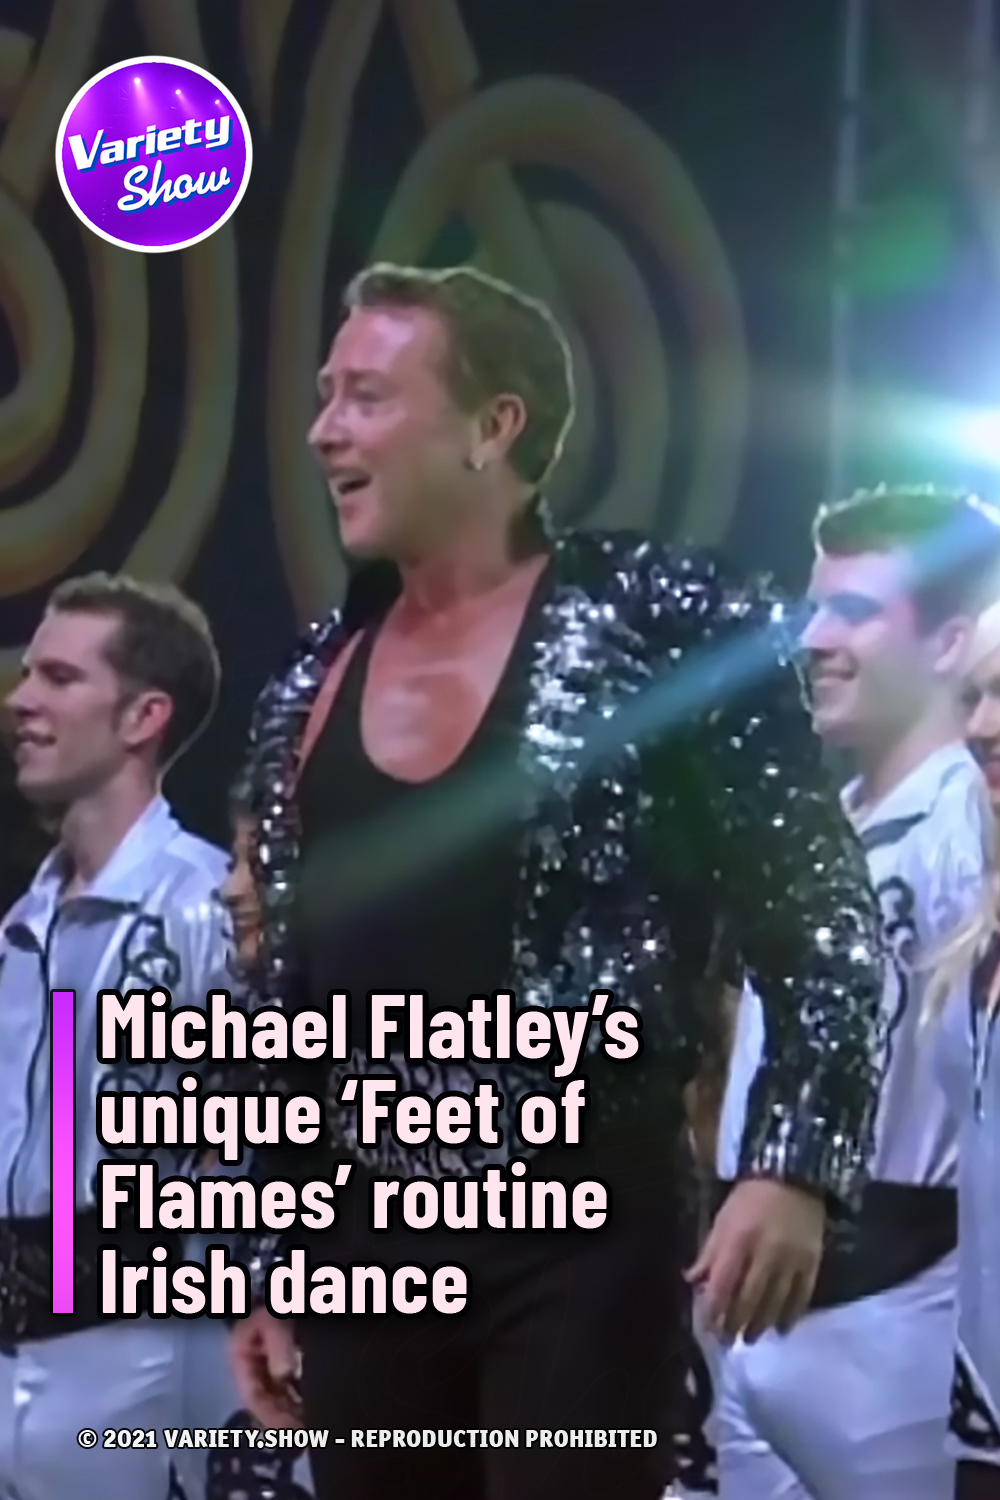 Michael Flatley’s unique ‘Feet of Flames’ routine Irish dance